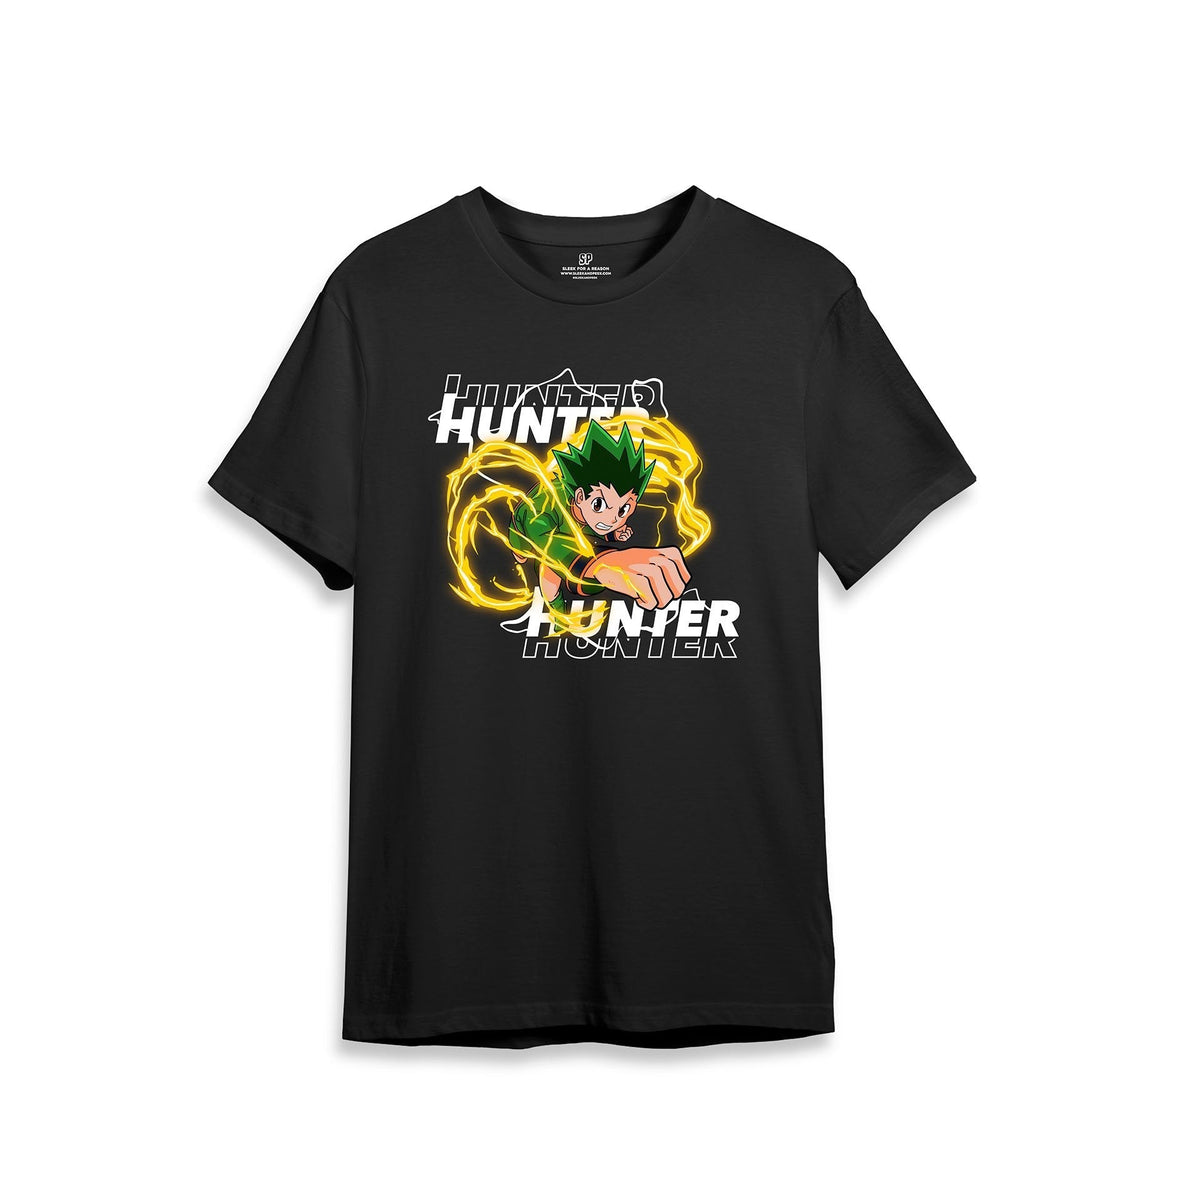 Gon Freecss - Hunter X Hunter T-shirt - Sleek&Peek